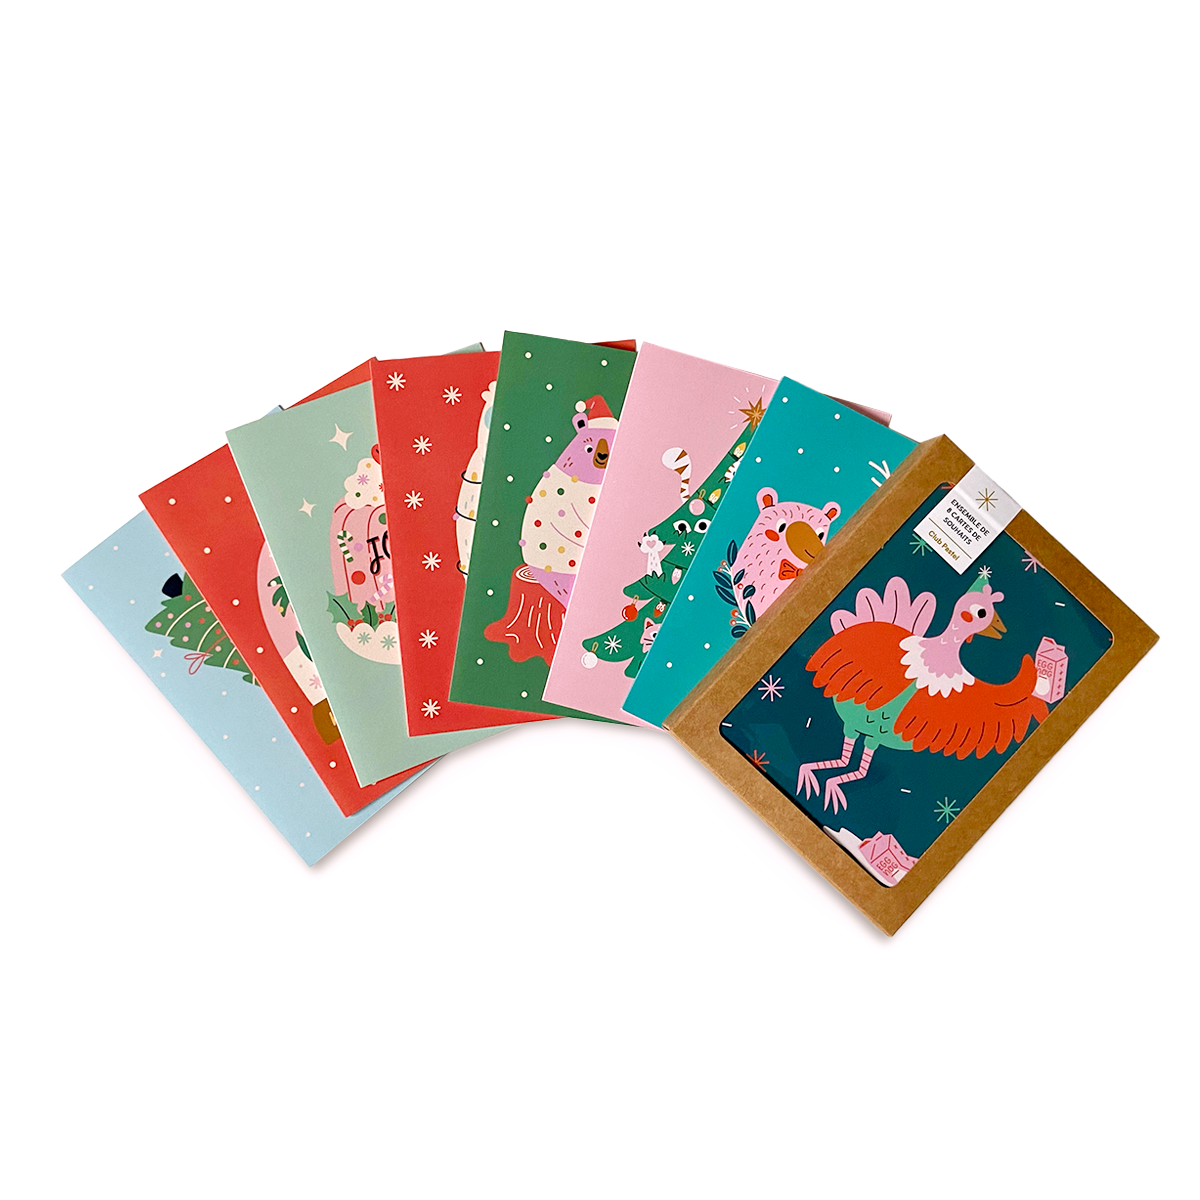 Paquet de 8 cartes mixtes des fêtes